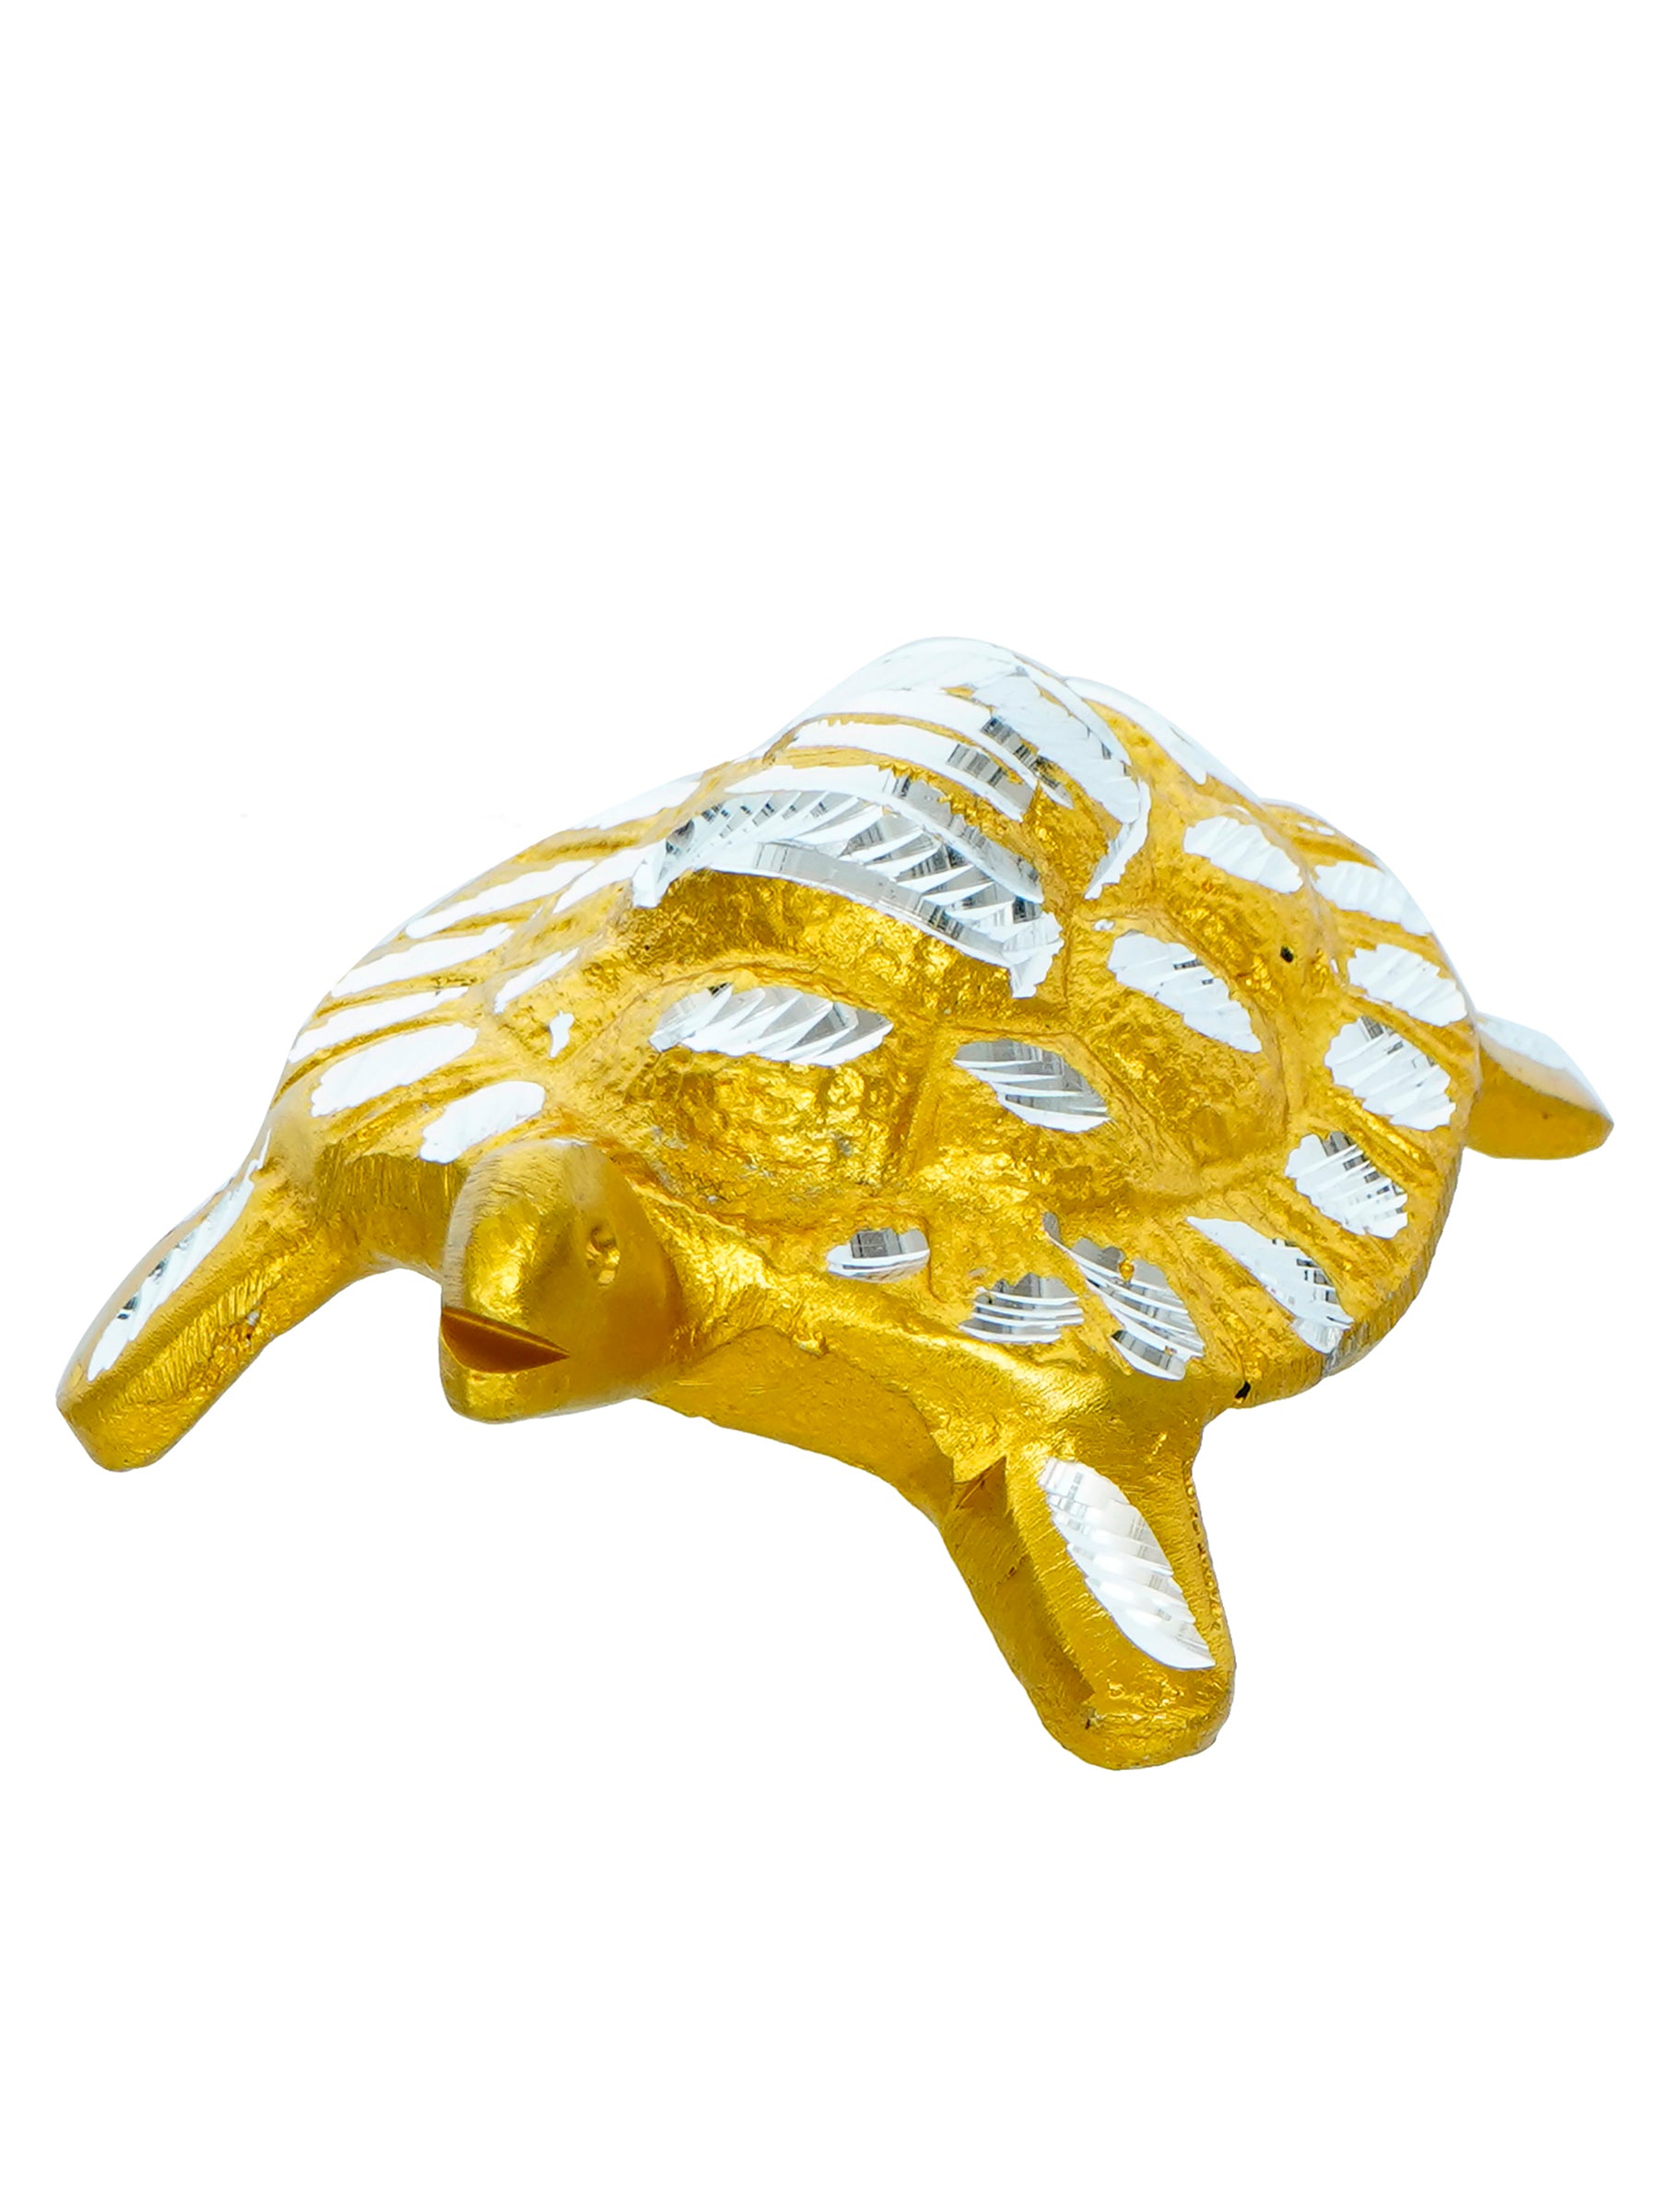 Golden Engraved Feng Shui Tortoise Figurines Decorative Metal Showpiece 2